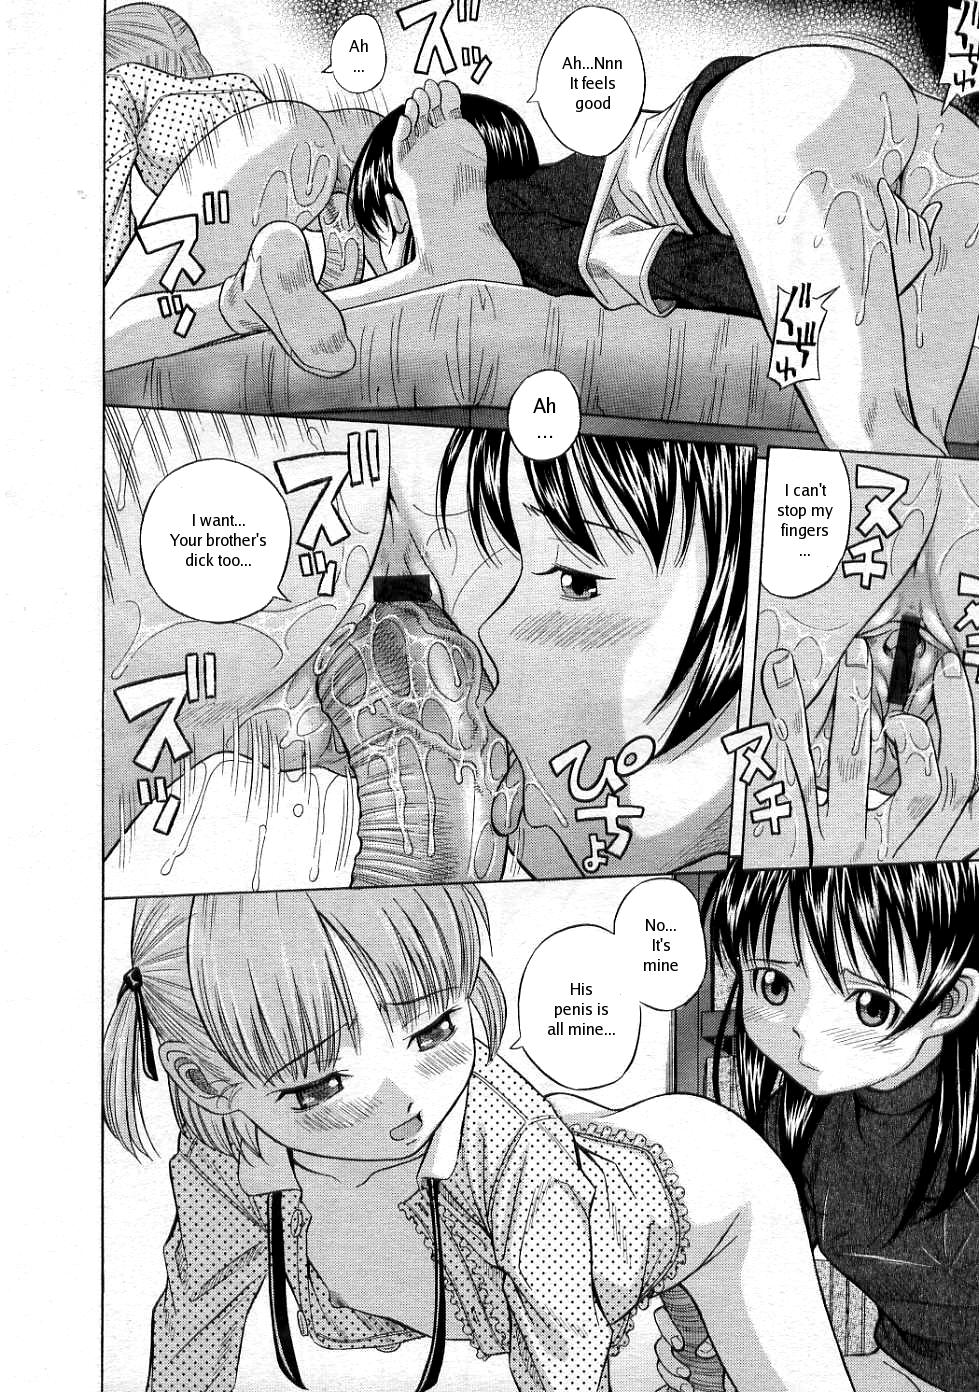 Manga Incest Porn - Hentai Manga Porn image #7430